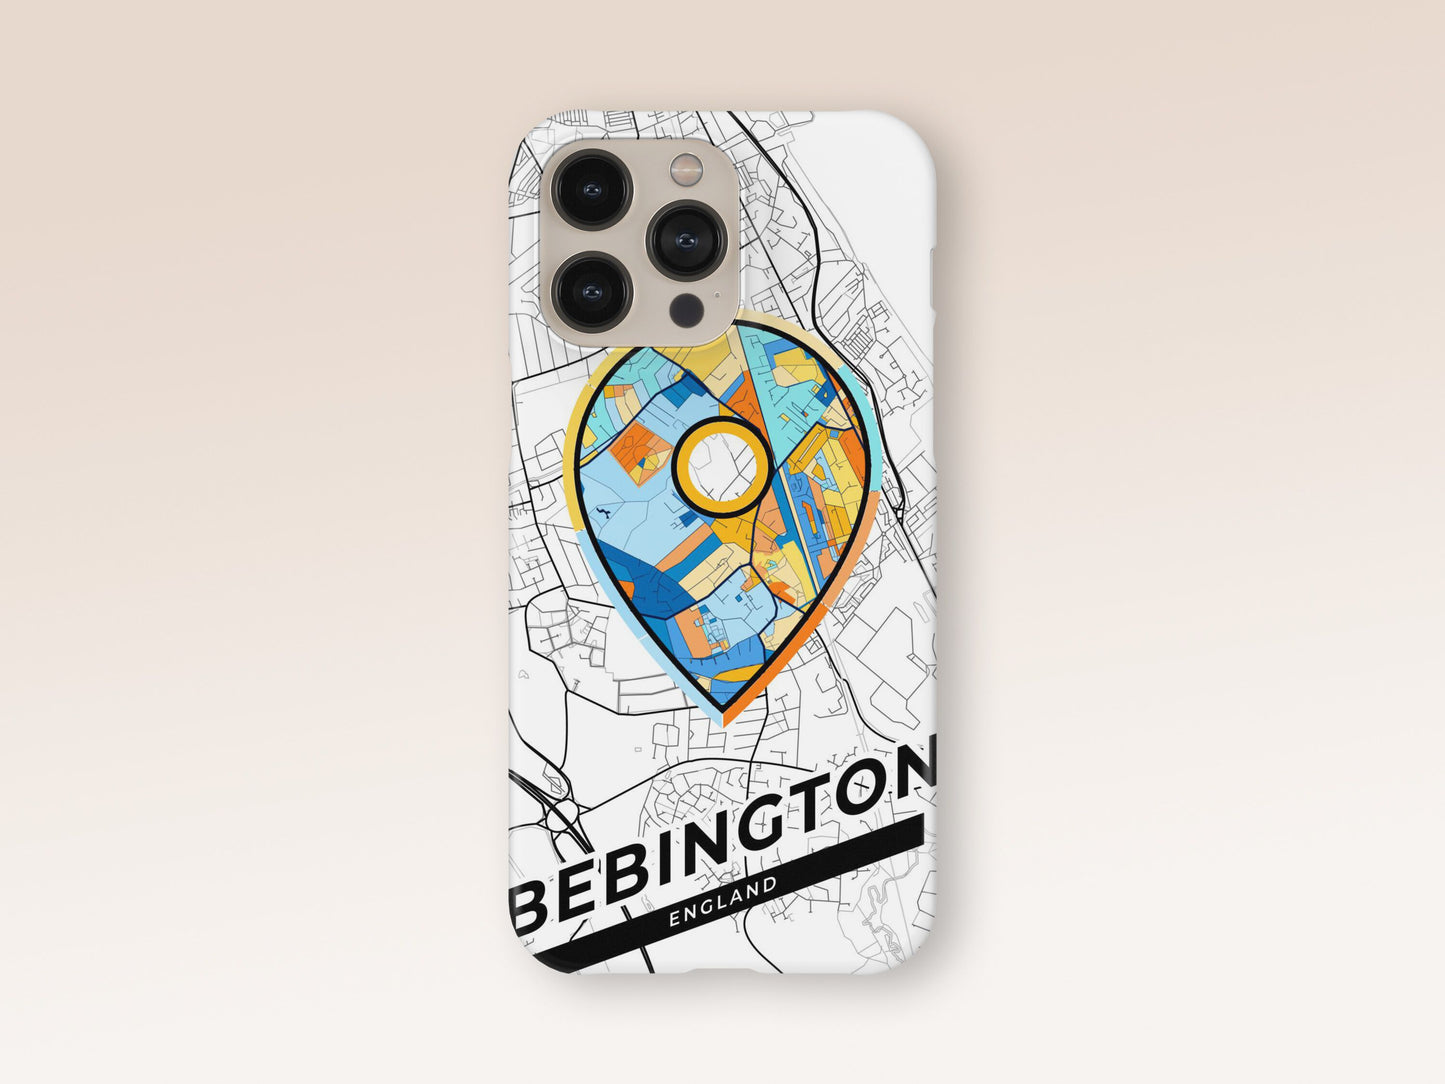 Bebington England slim phone case with colorful icon. Birthday, wedding or housewarming gift. Couple match cases. 1